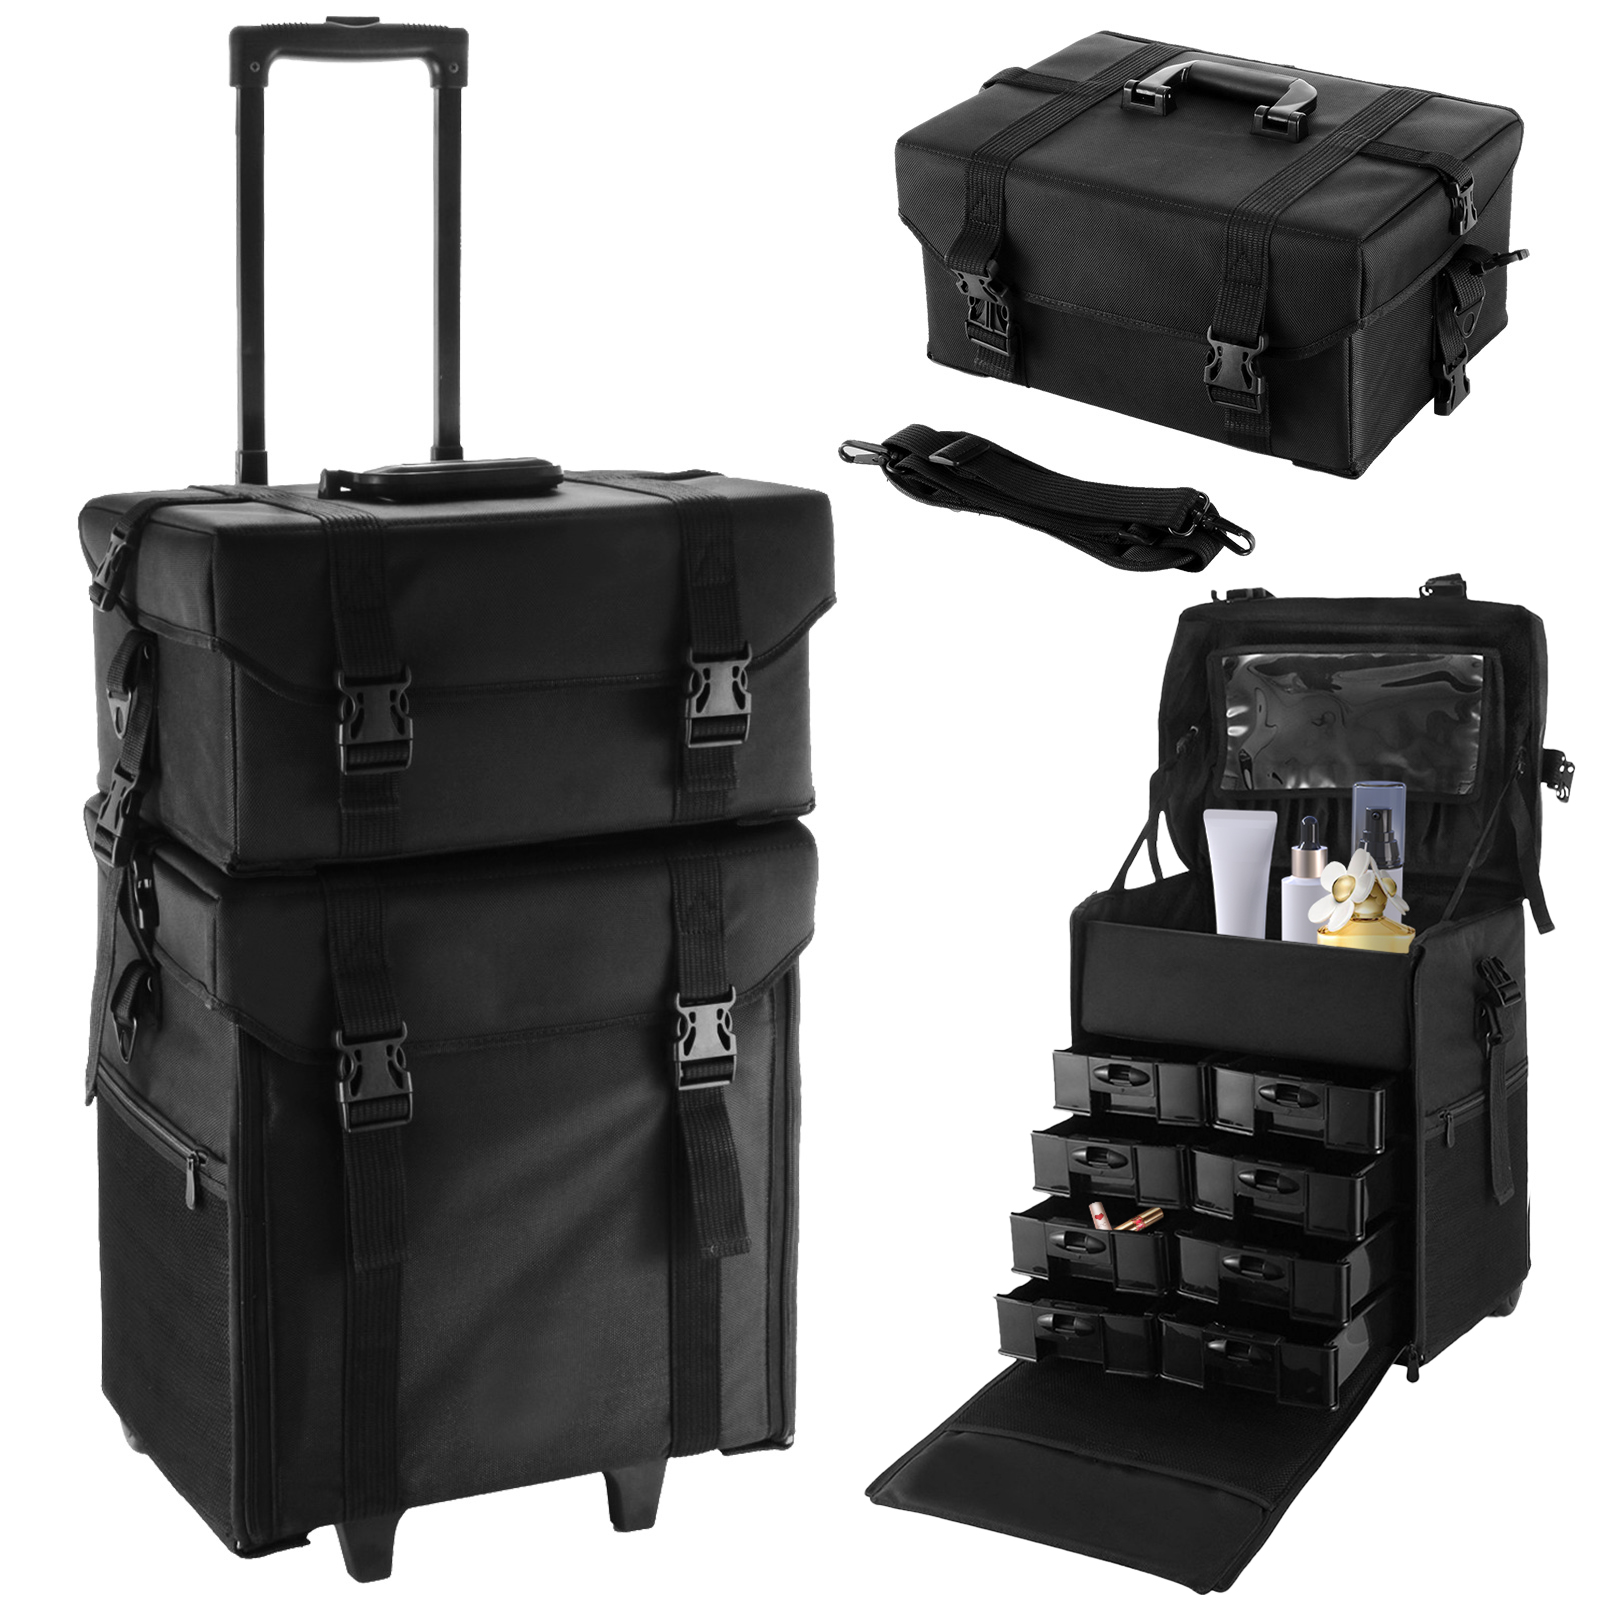 VEVOR VEVOR 2 in 1 Makeup Case Train Box Cosmetic Organizer Rolling Luggage  Trolley Bag Black Professional Makeup Case Organizer Beauty Case on Wheels